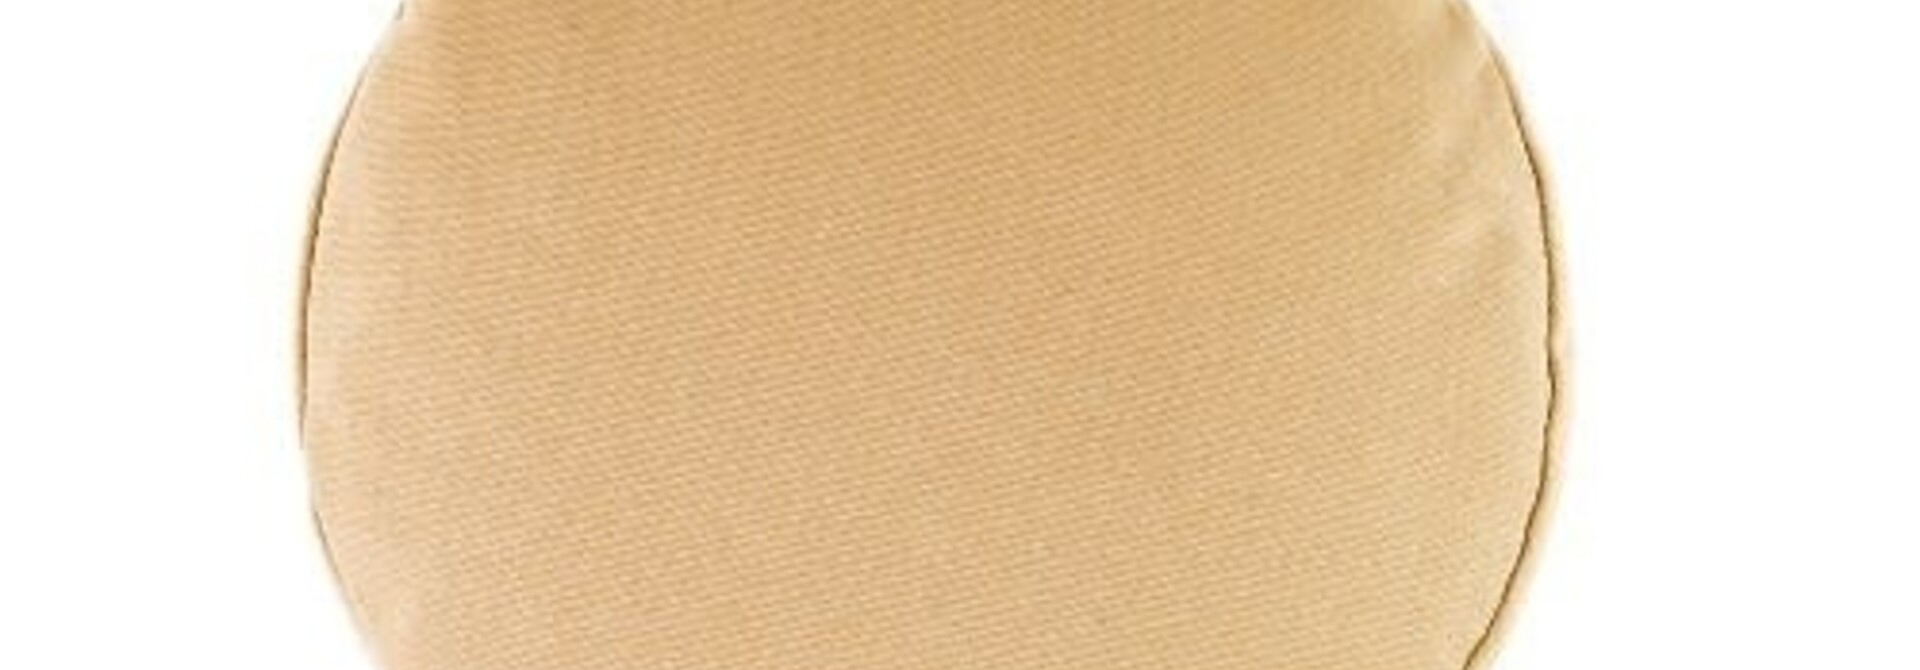 Yogisha Meditationskissen Deluxe 9 cm hoch